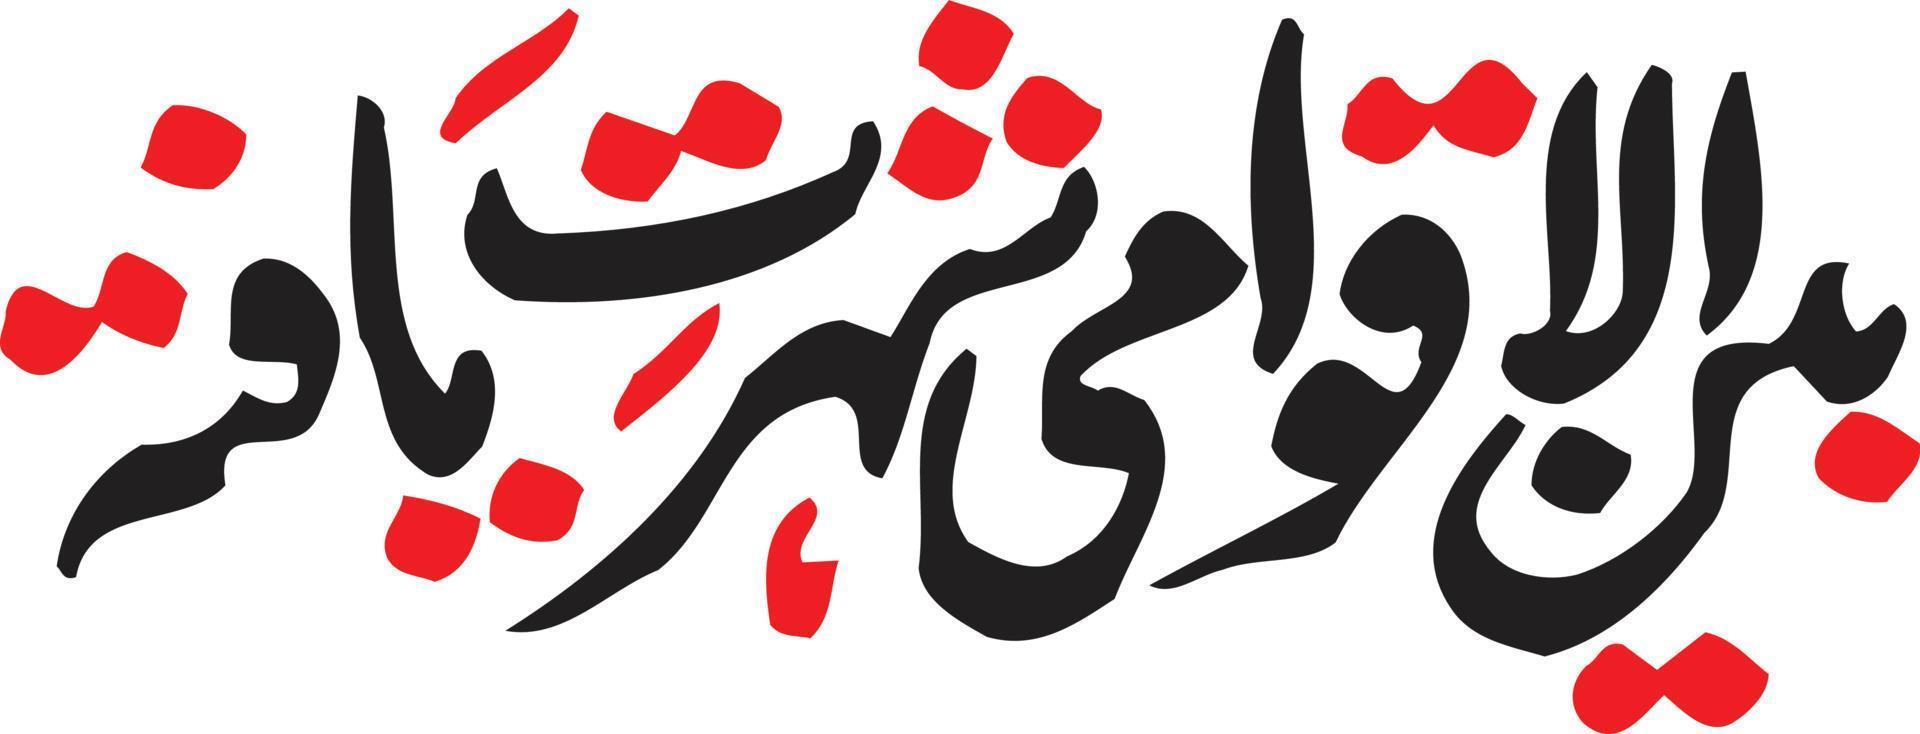 sido alaqwami shorat yafta título islâmica urdu caligrafia árabe vetor livre